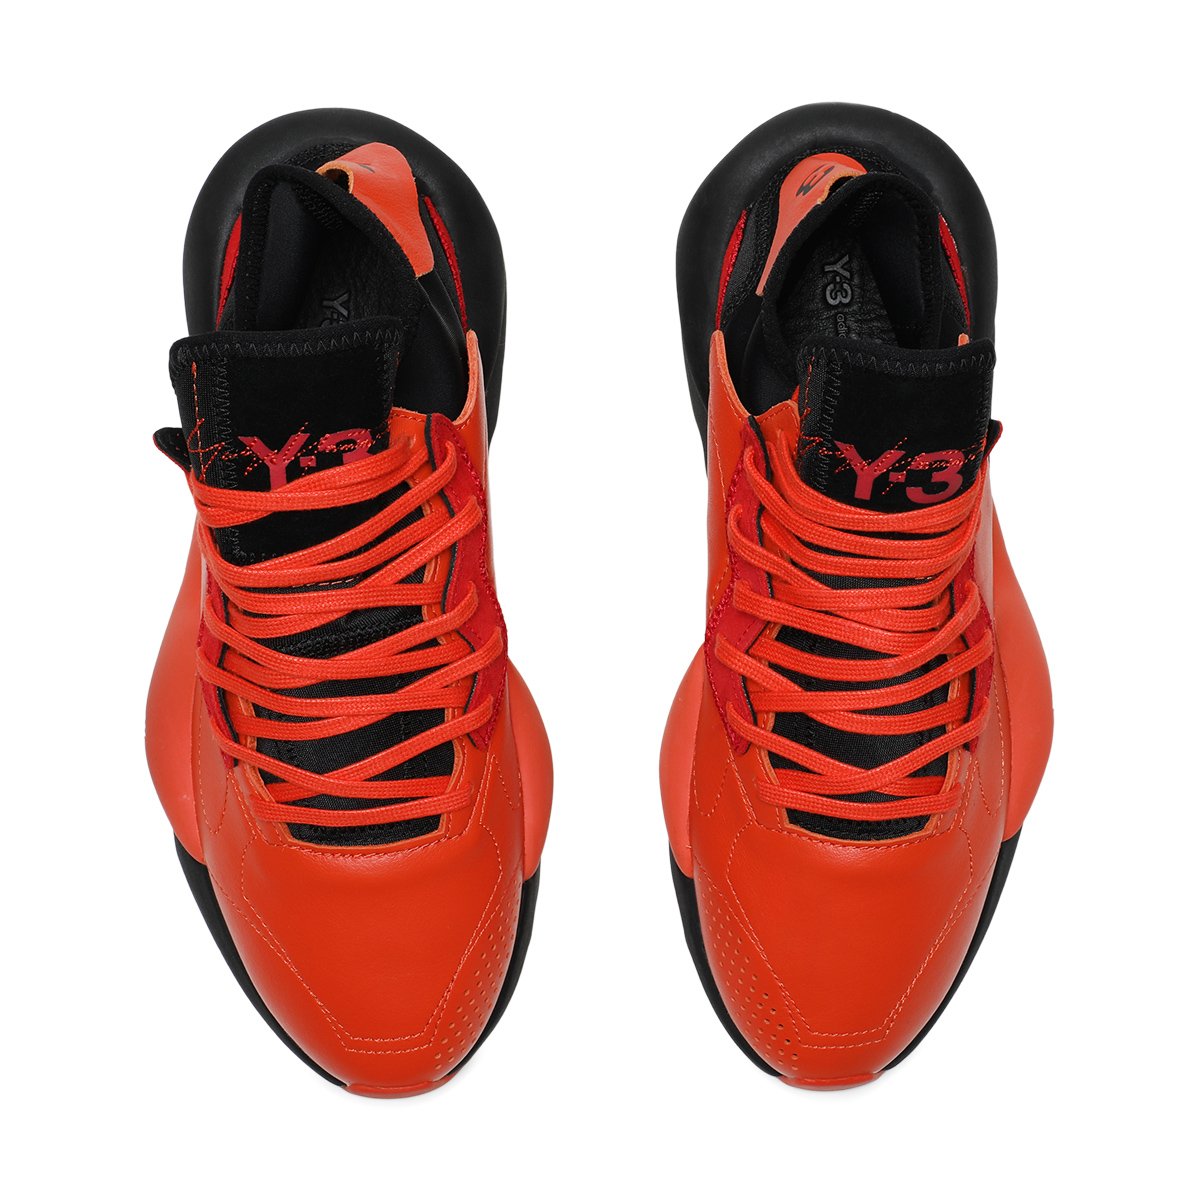 adidas y3 trainers black and orange